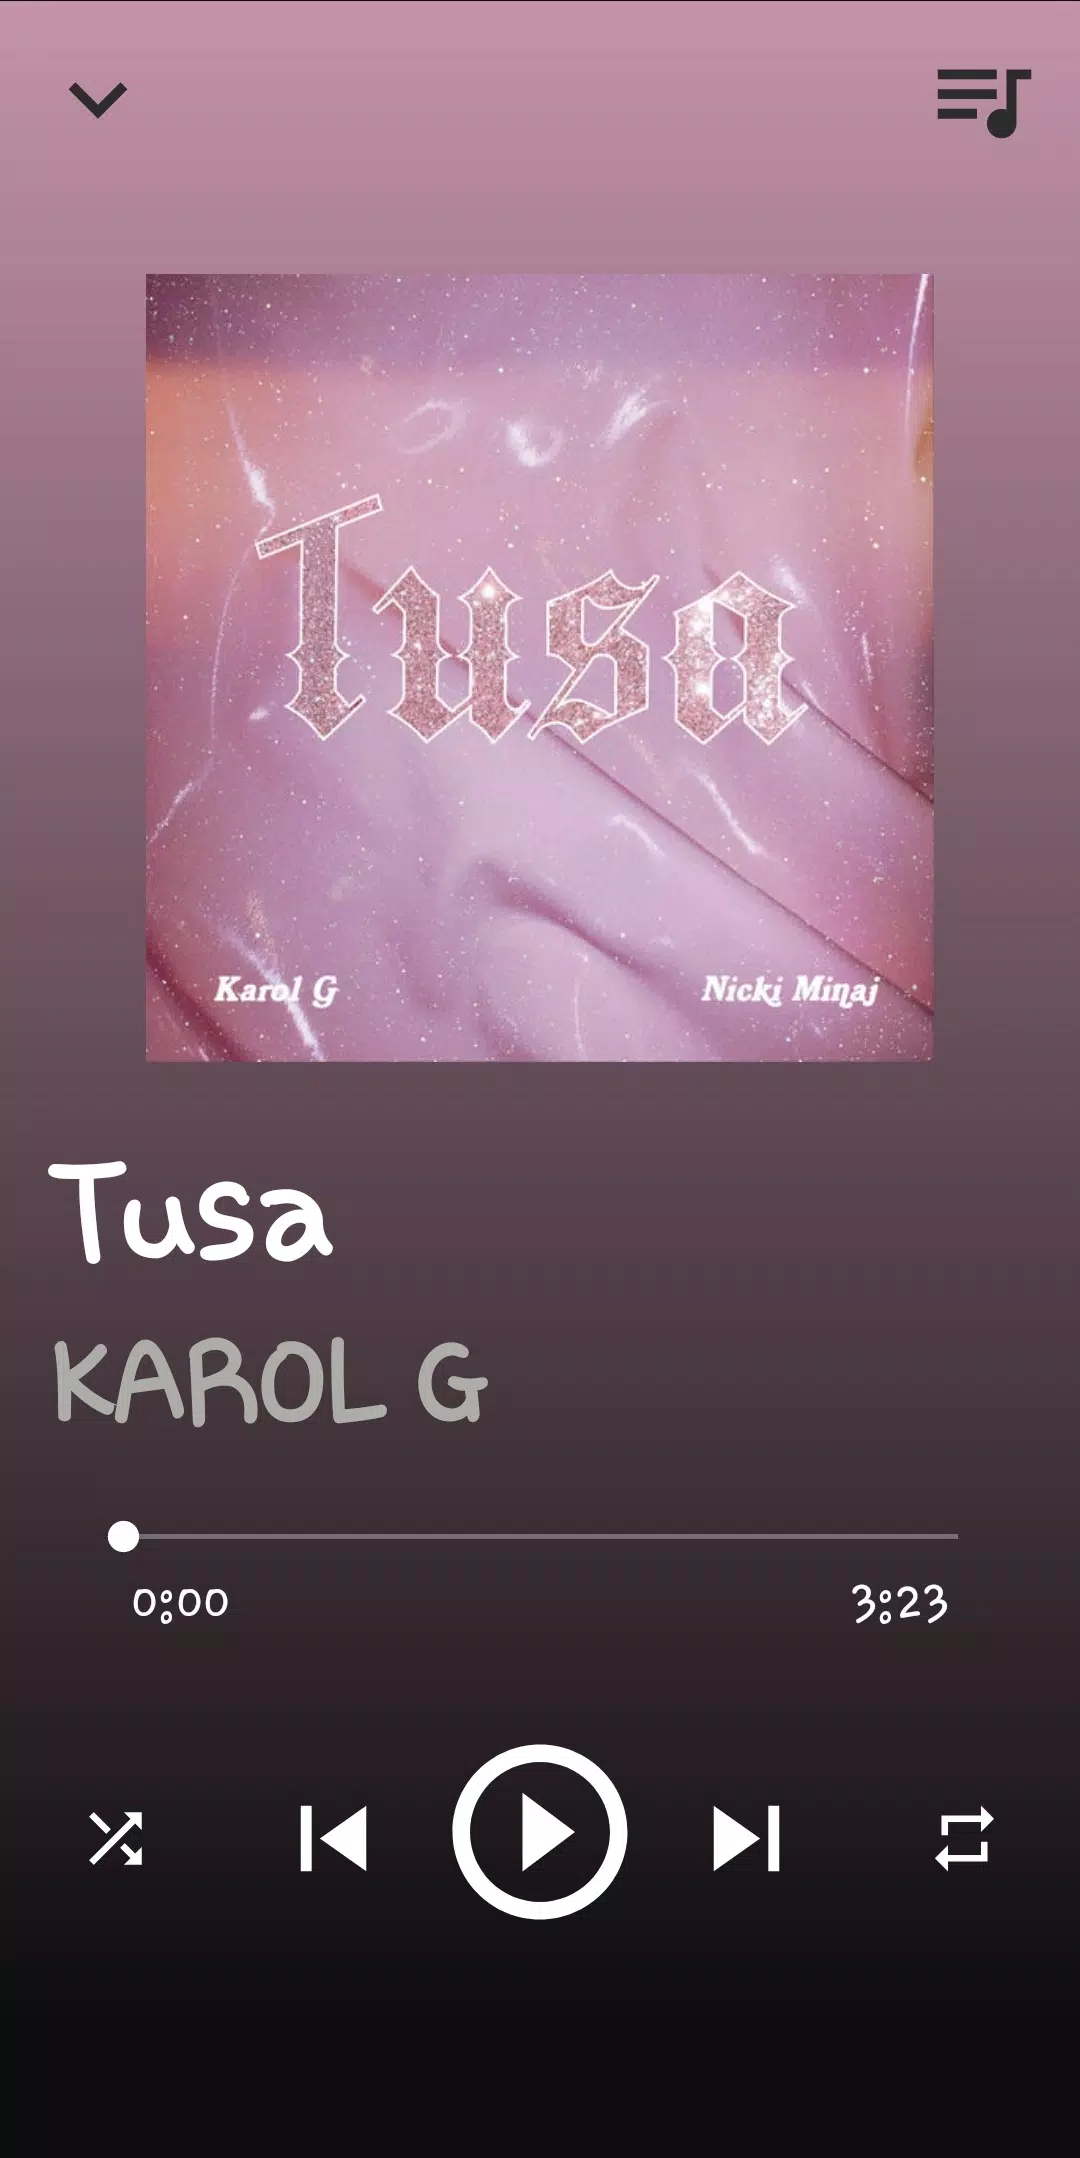 Descarga de APK de KAROL G, Nicki Minaj - Tusa - Yeezy Music para Android